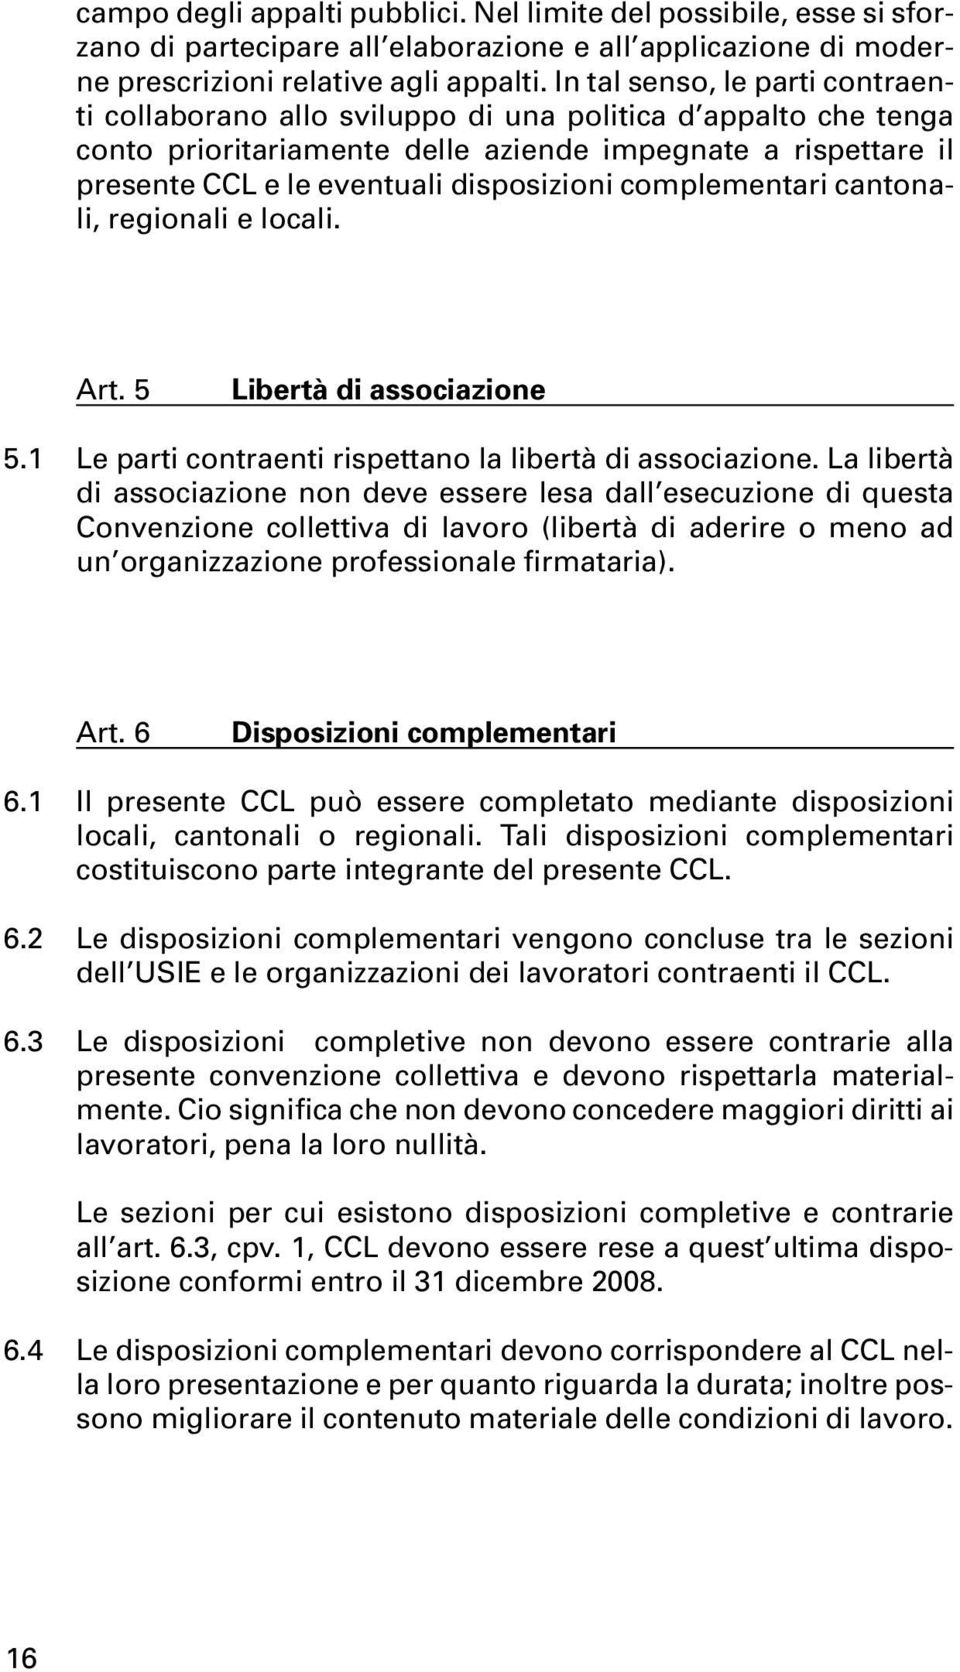 complementari cantonali, regionali e locali. Art. 5 Libertà di associazione 5.1 Le parti contraenti rispettano la libertà di associazione.